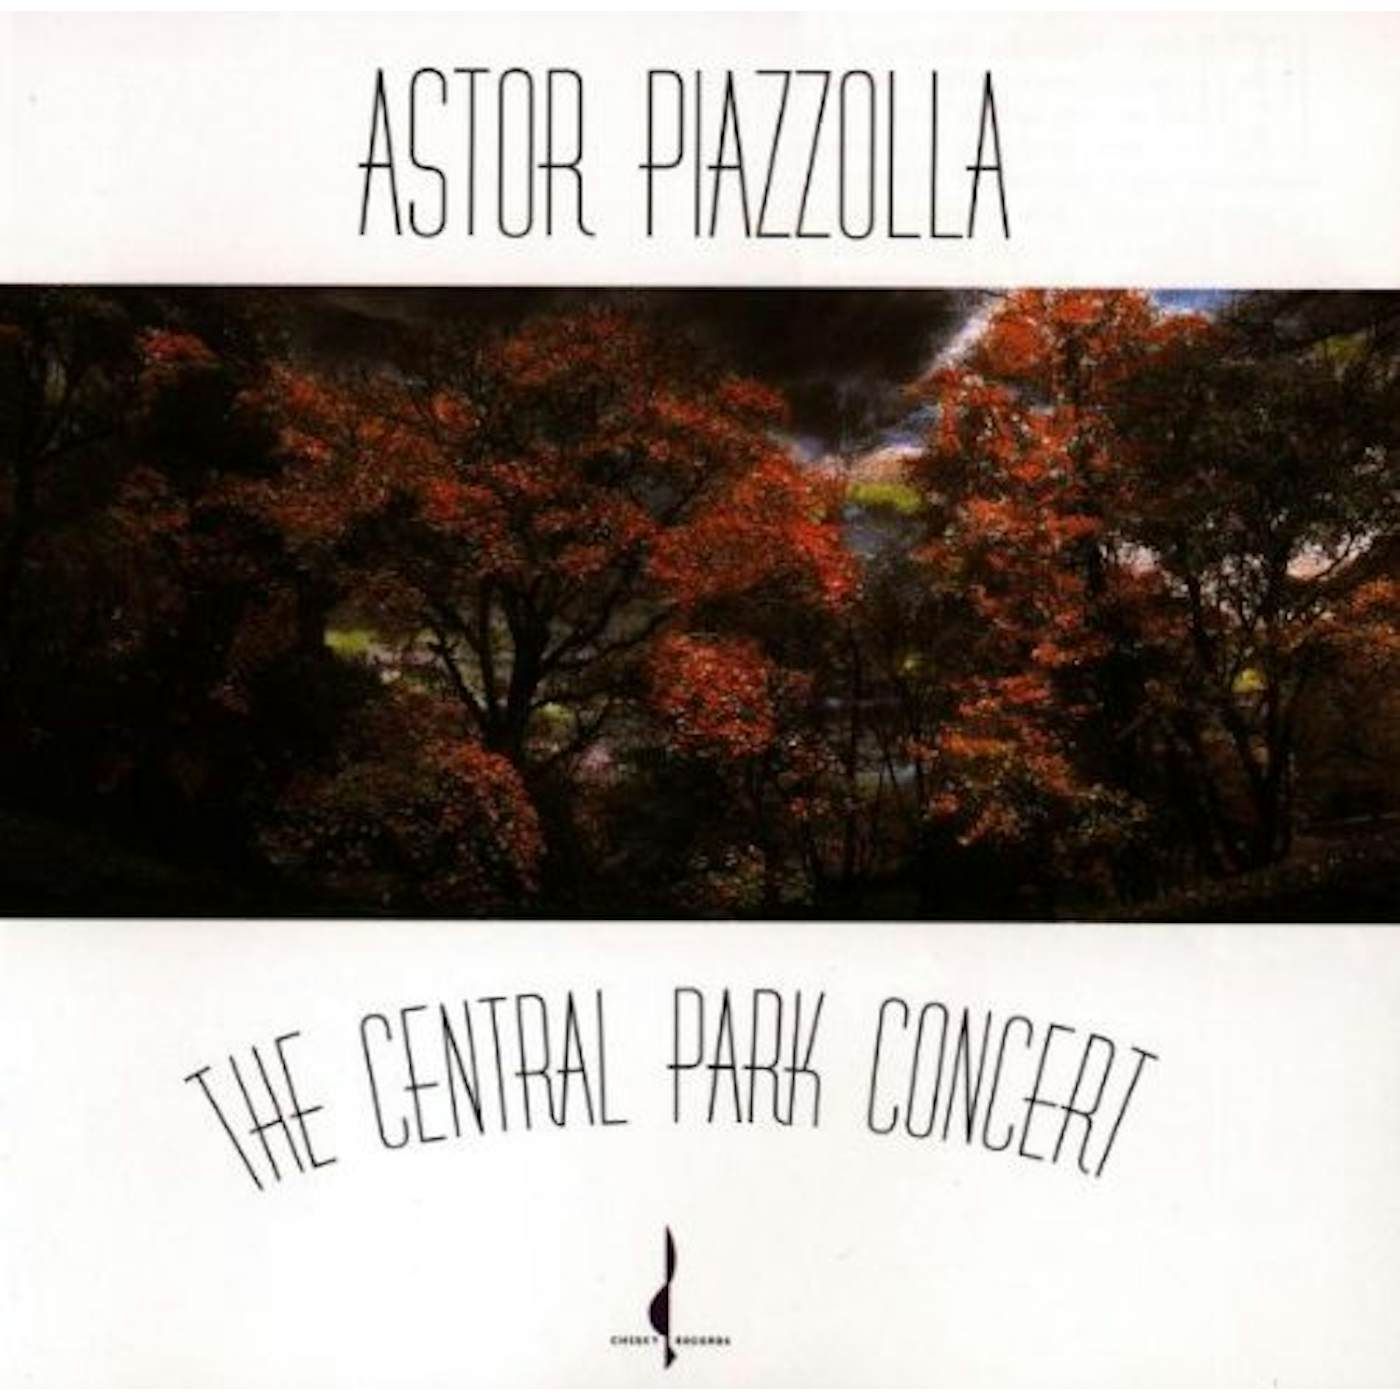 Astor Piazzolla CENTRAL PARK CONCERT CD